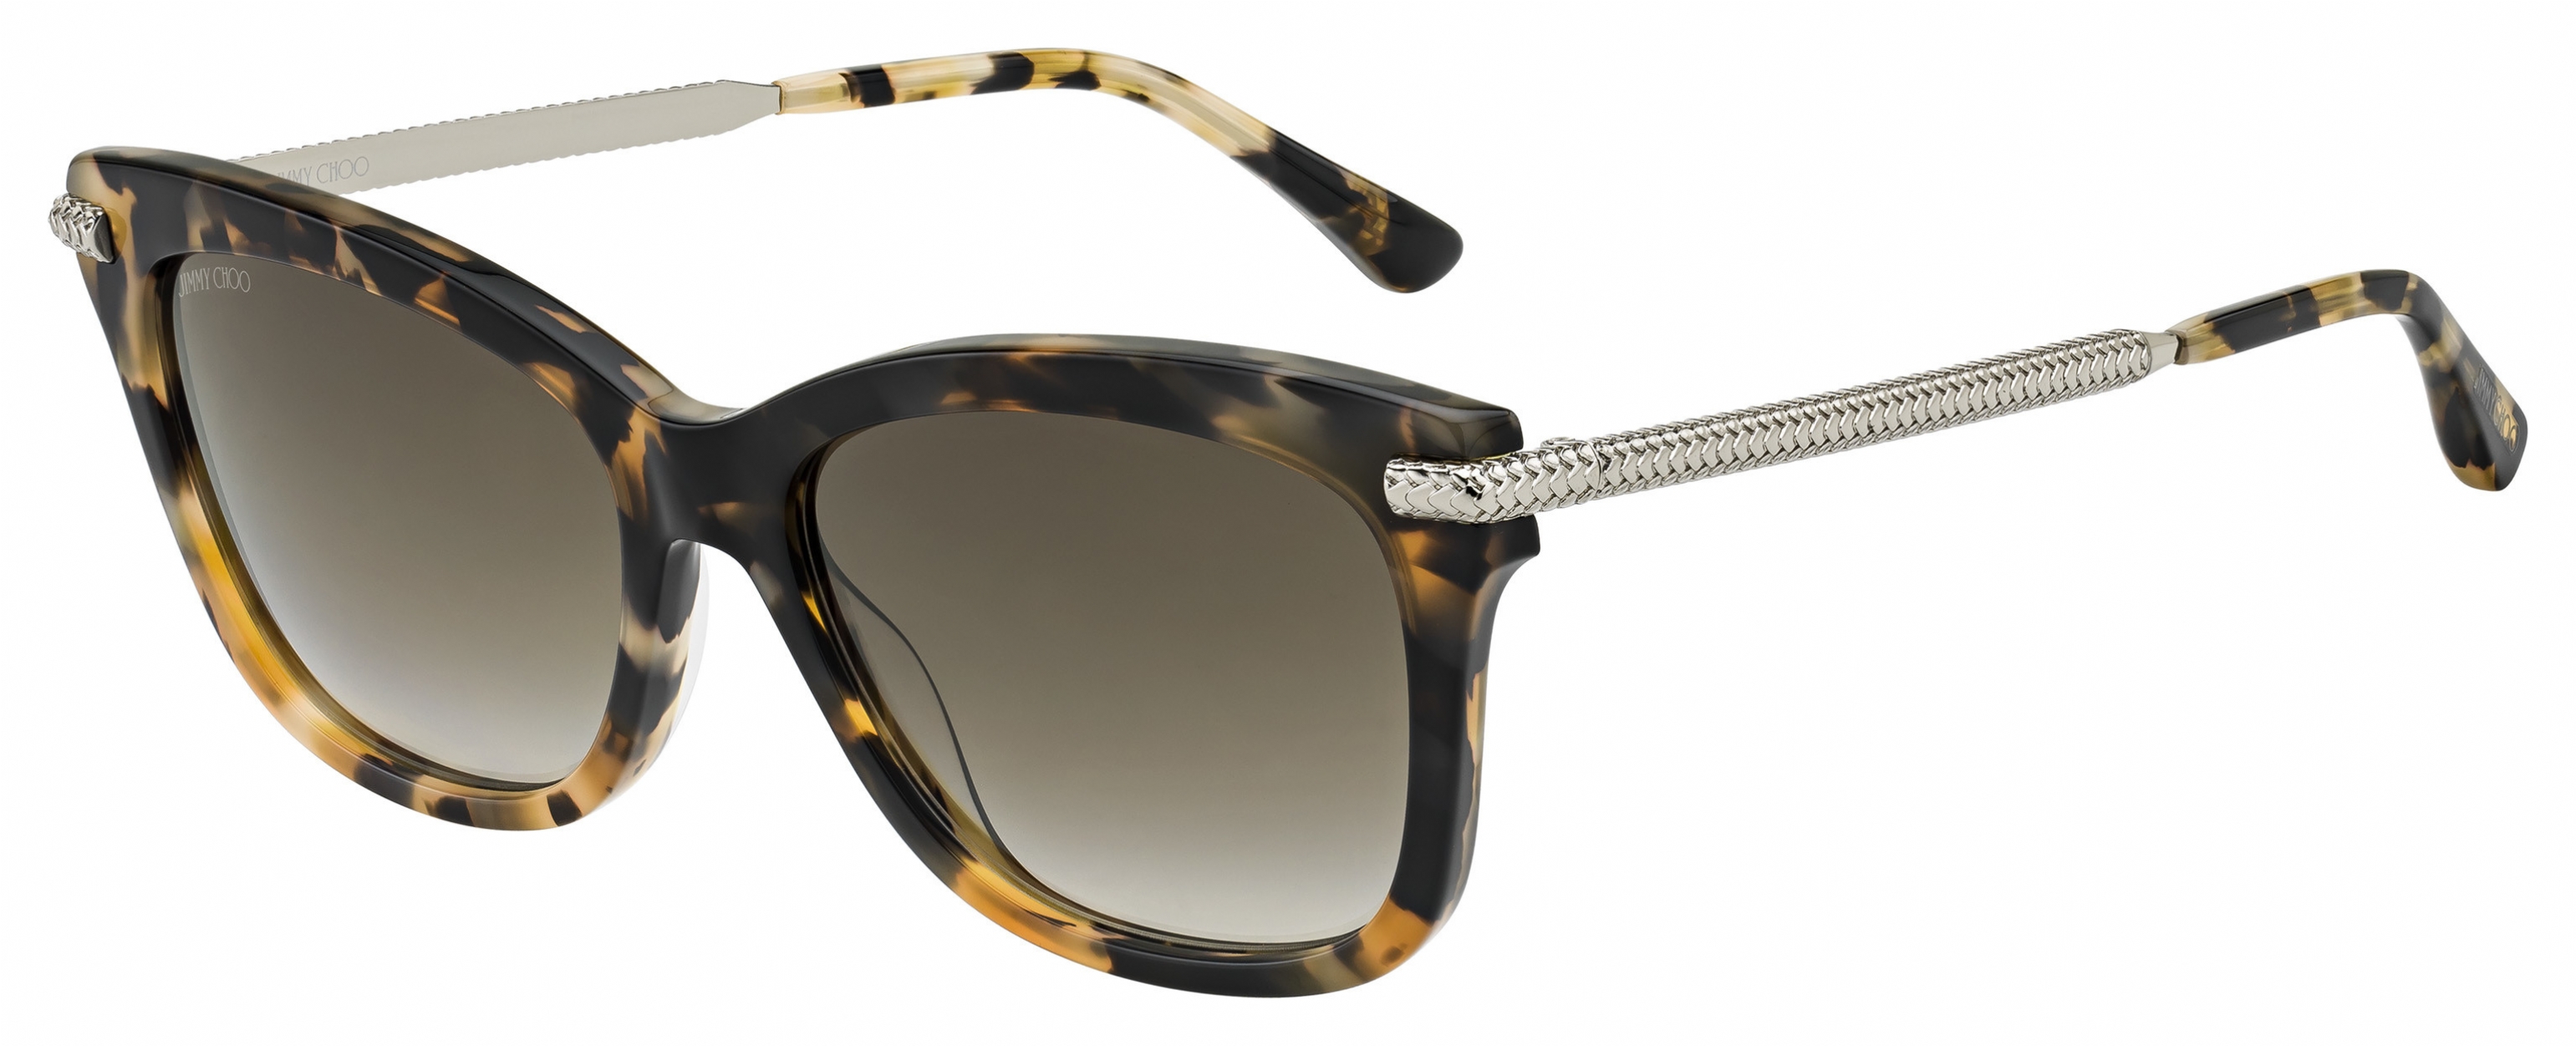 Buy Jimmy Choo Sunglasses directly from OpticsFast.com